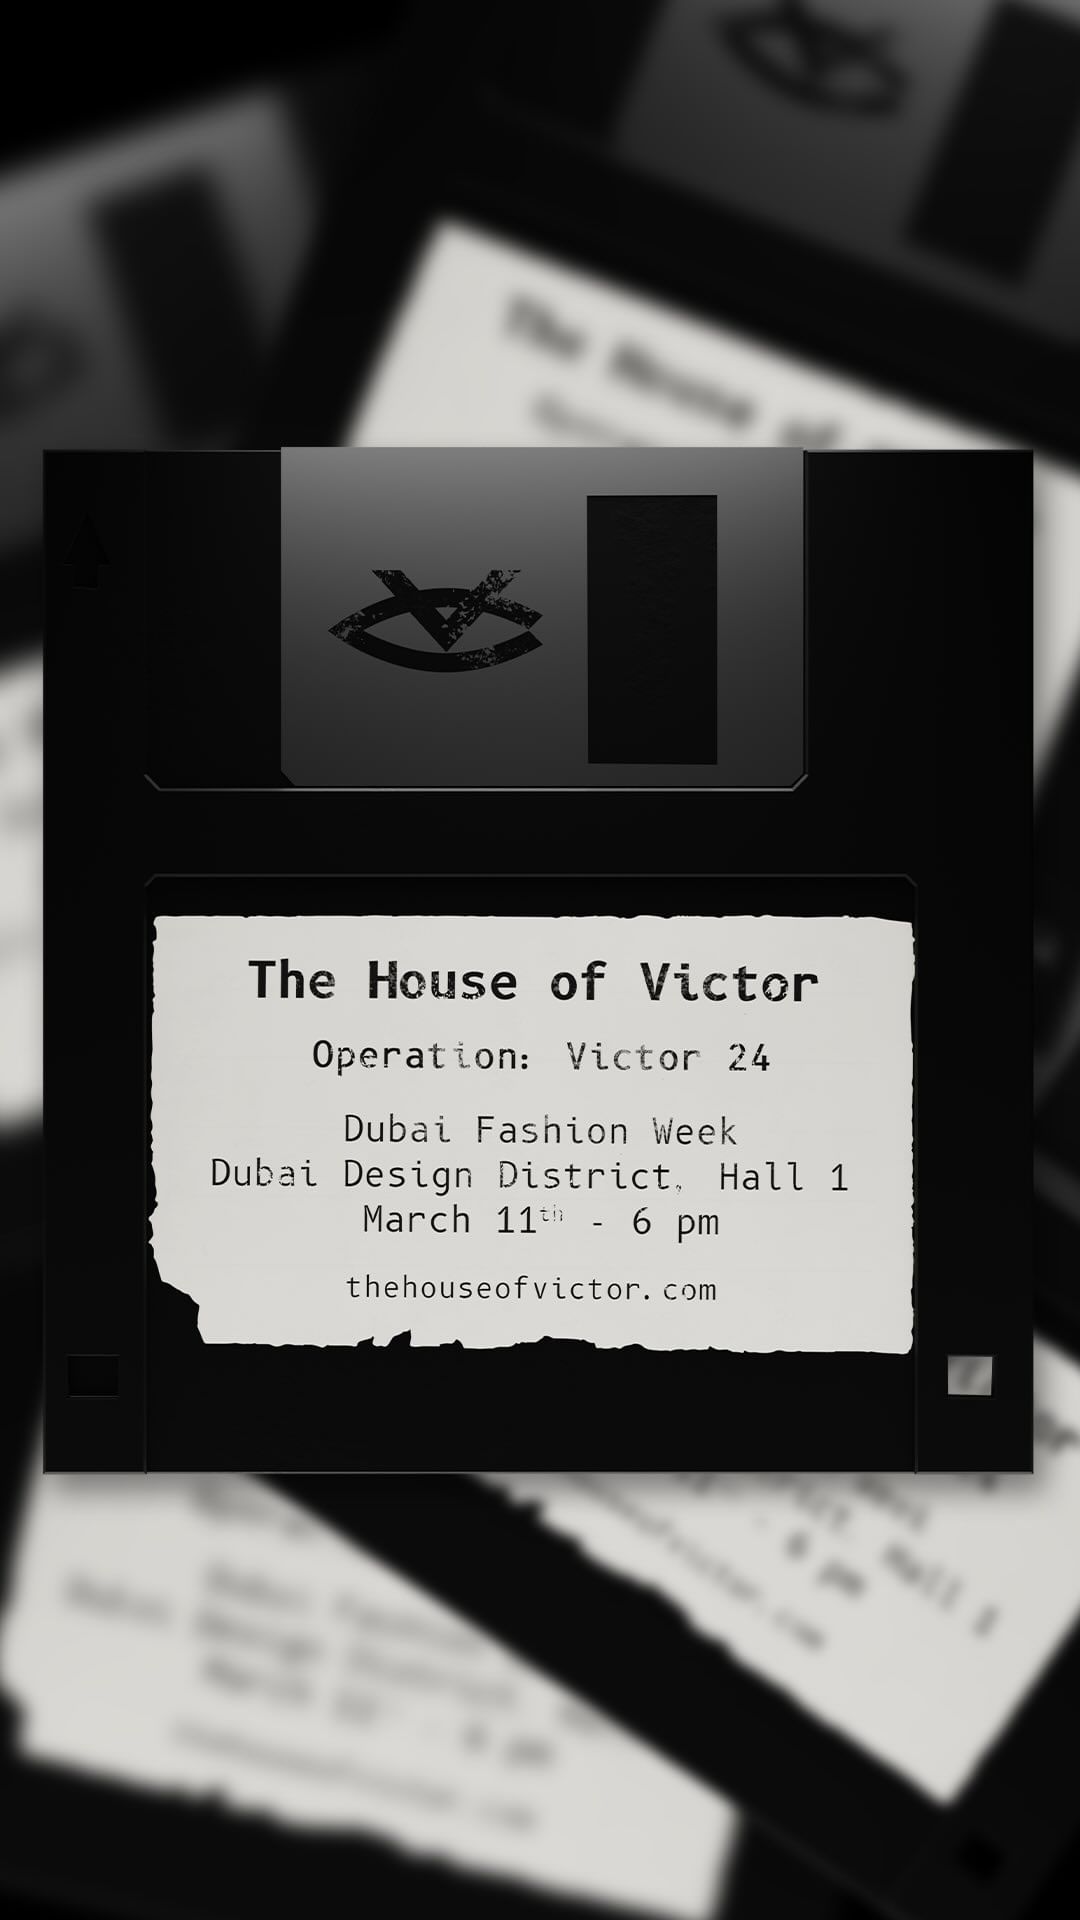 Operation: Victor 24
Dubai Fashion Week @dubaifashionweek 
Saturday March 11 - 6 pm
Dubai Design District - Hall 1
#houseofvictor #operationvictor24

